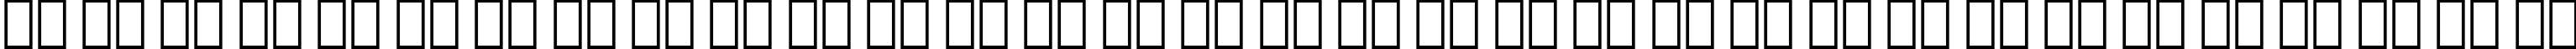 Пример написания русского алфавита шрифтом Ribbon 131 Bold BT